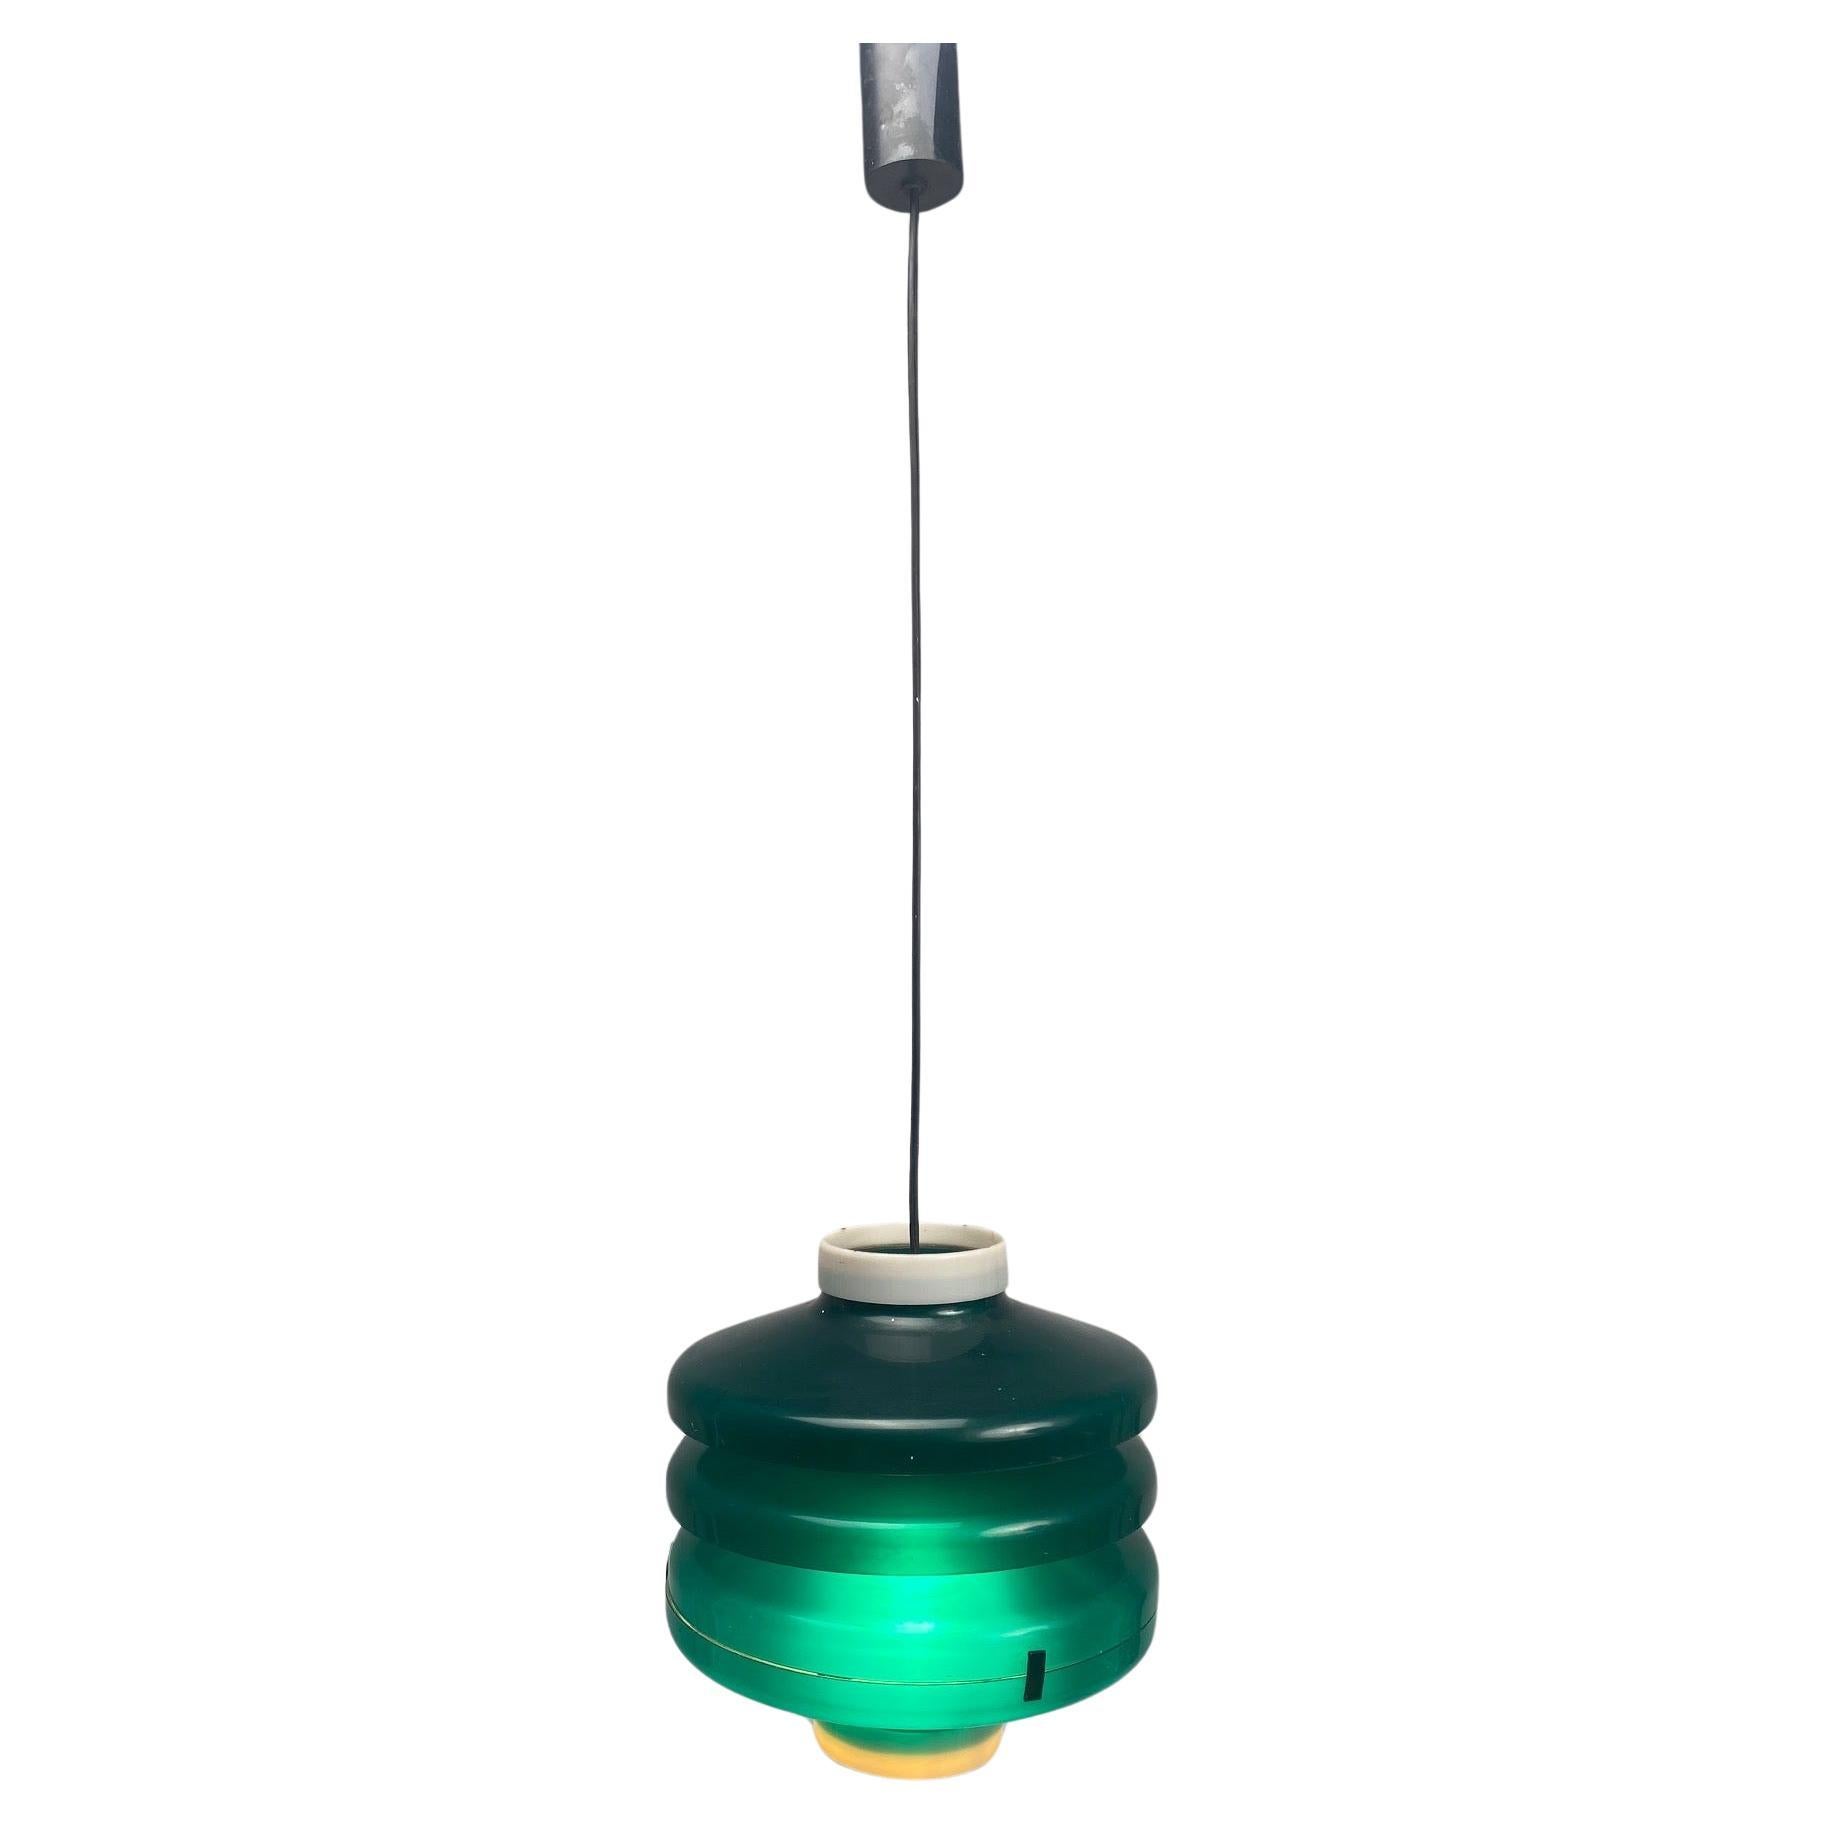 Lampe suspendue italienne des années 50, style Stilnovo